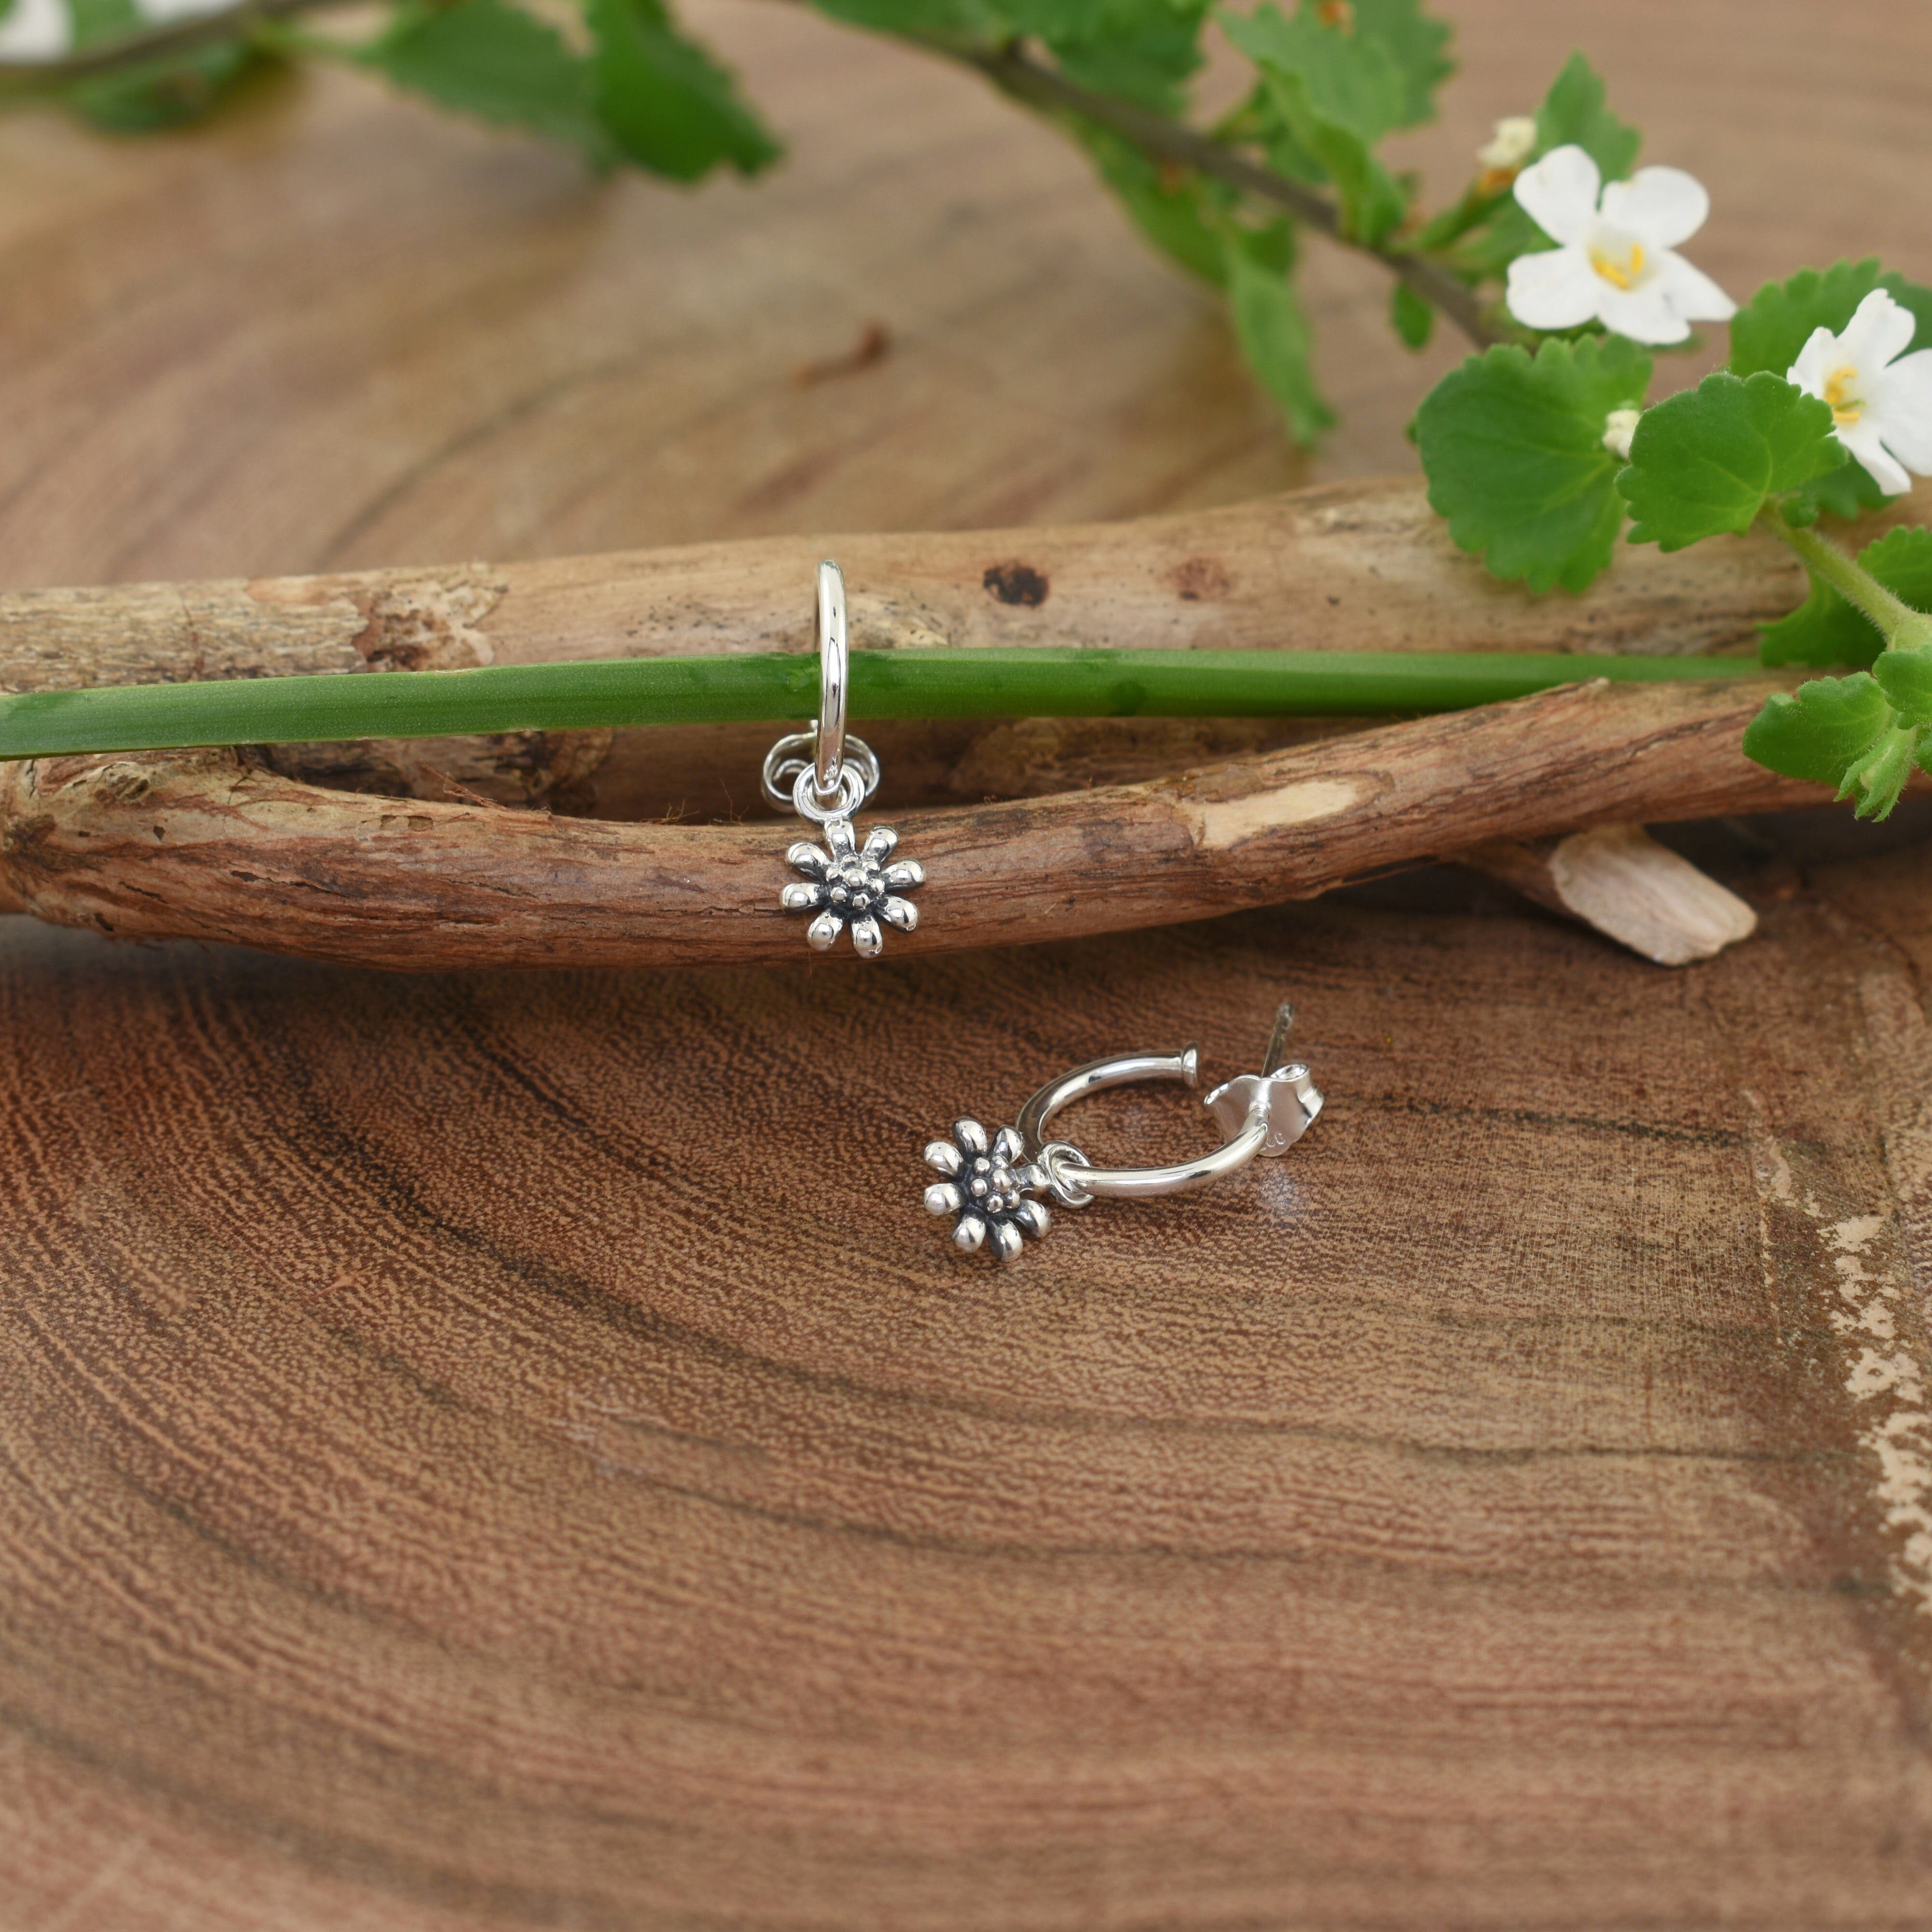 .925 sterling silver hoop earrings with flower dangle